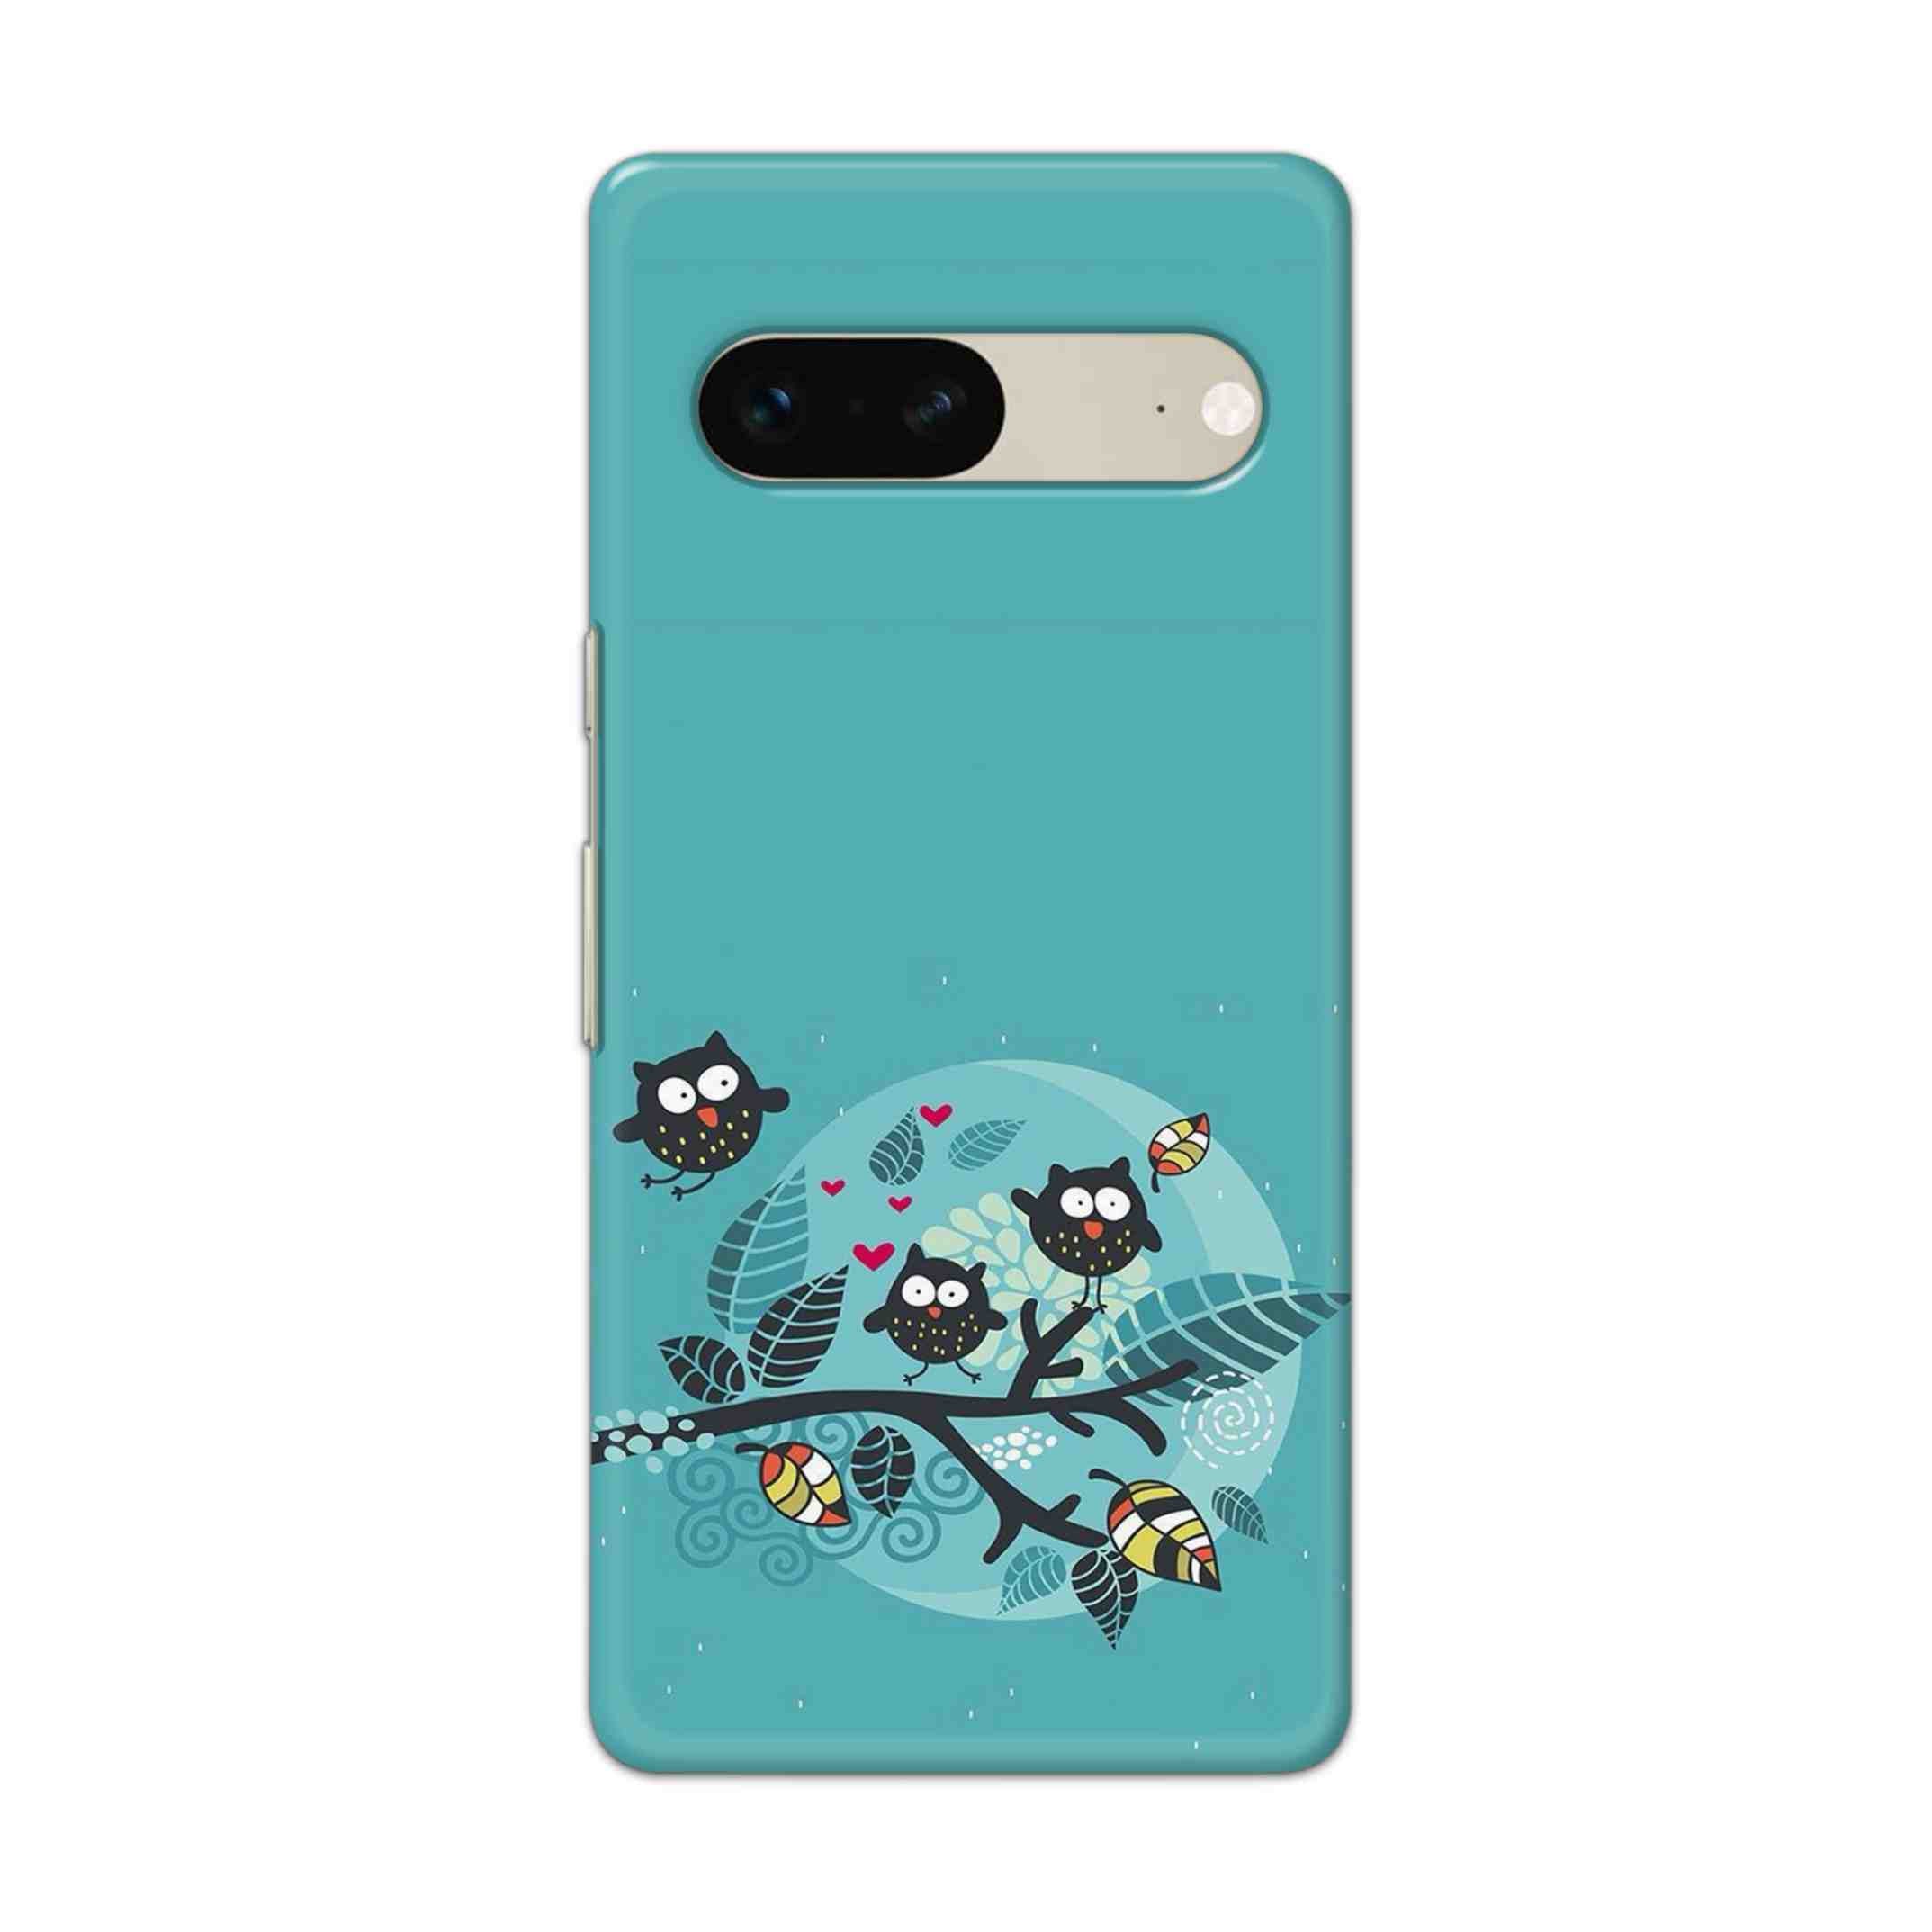 Buy Owl Hard Back Mobile Phone Case Cover For Google Pixel 7 Online